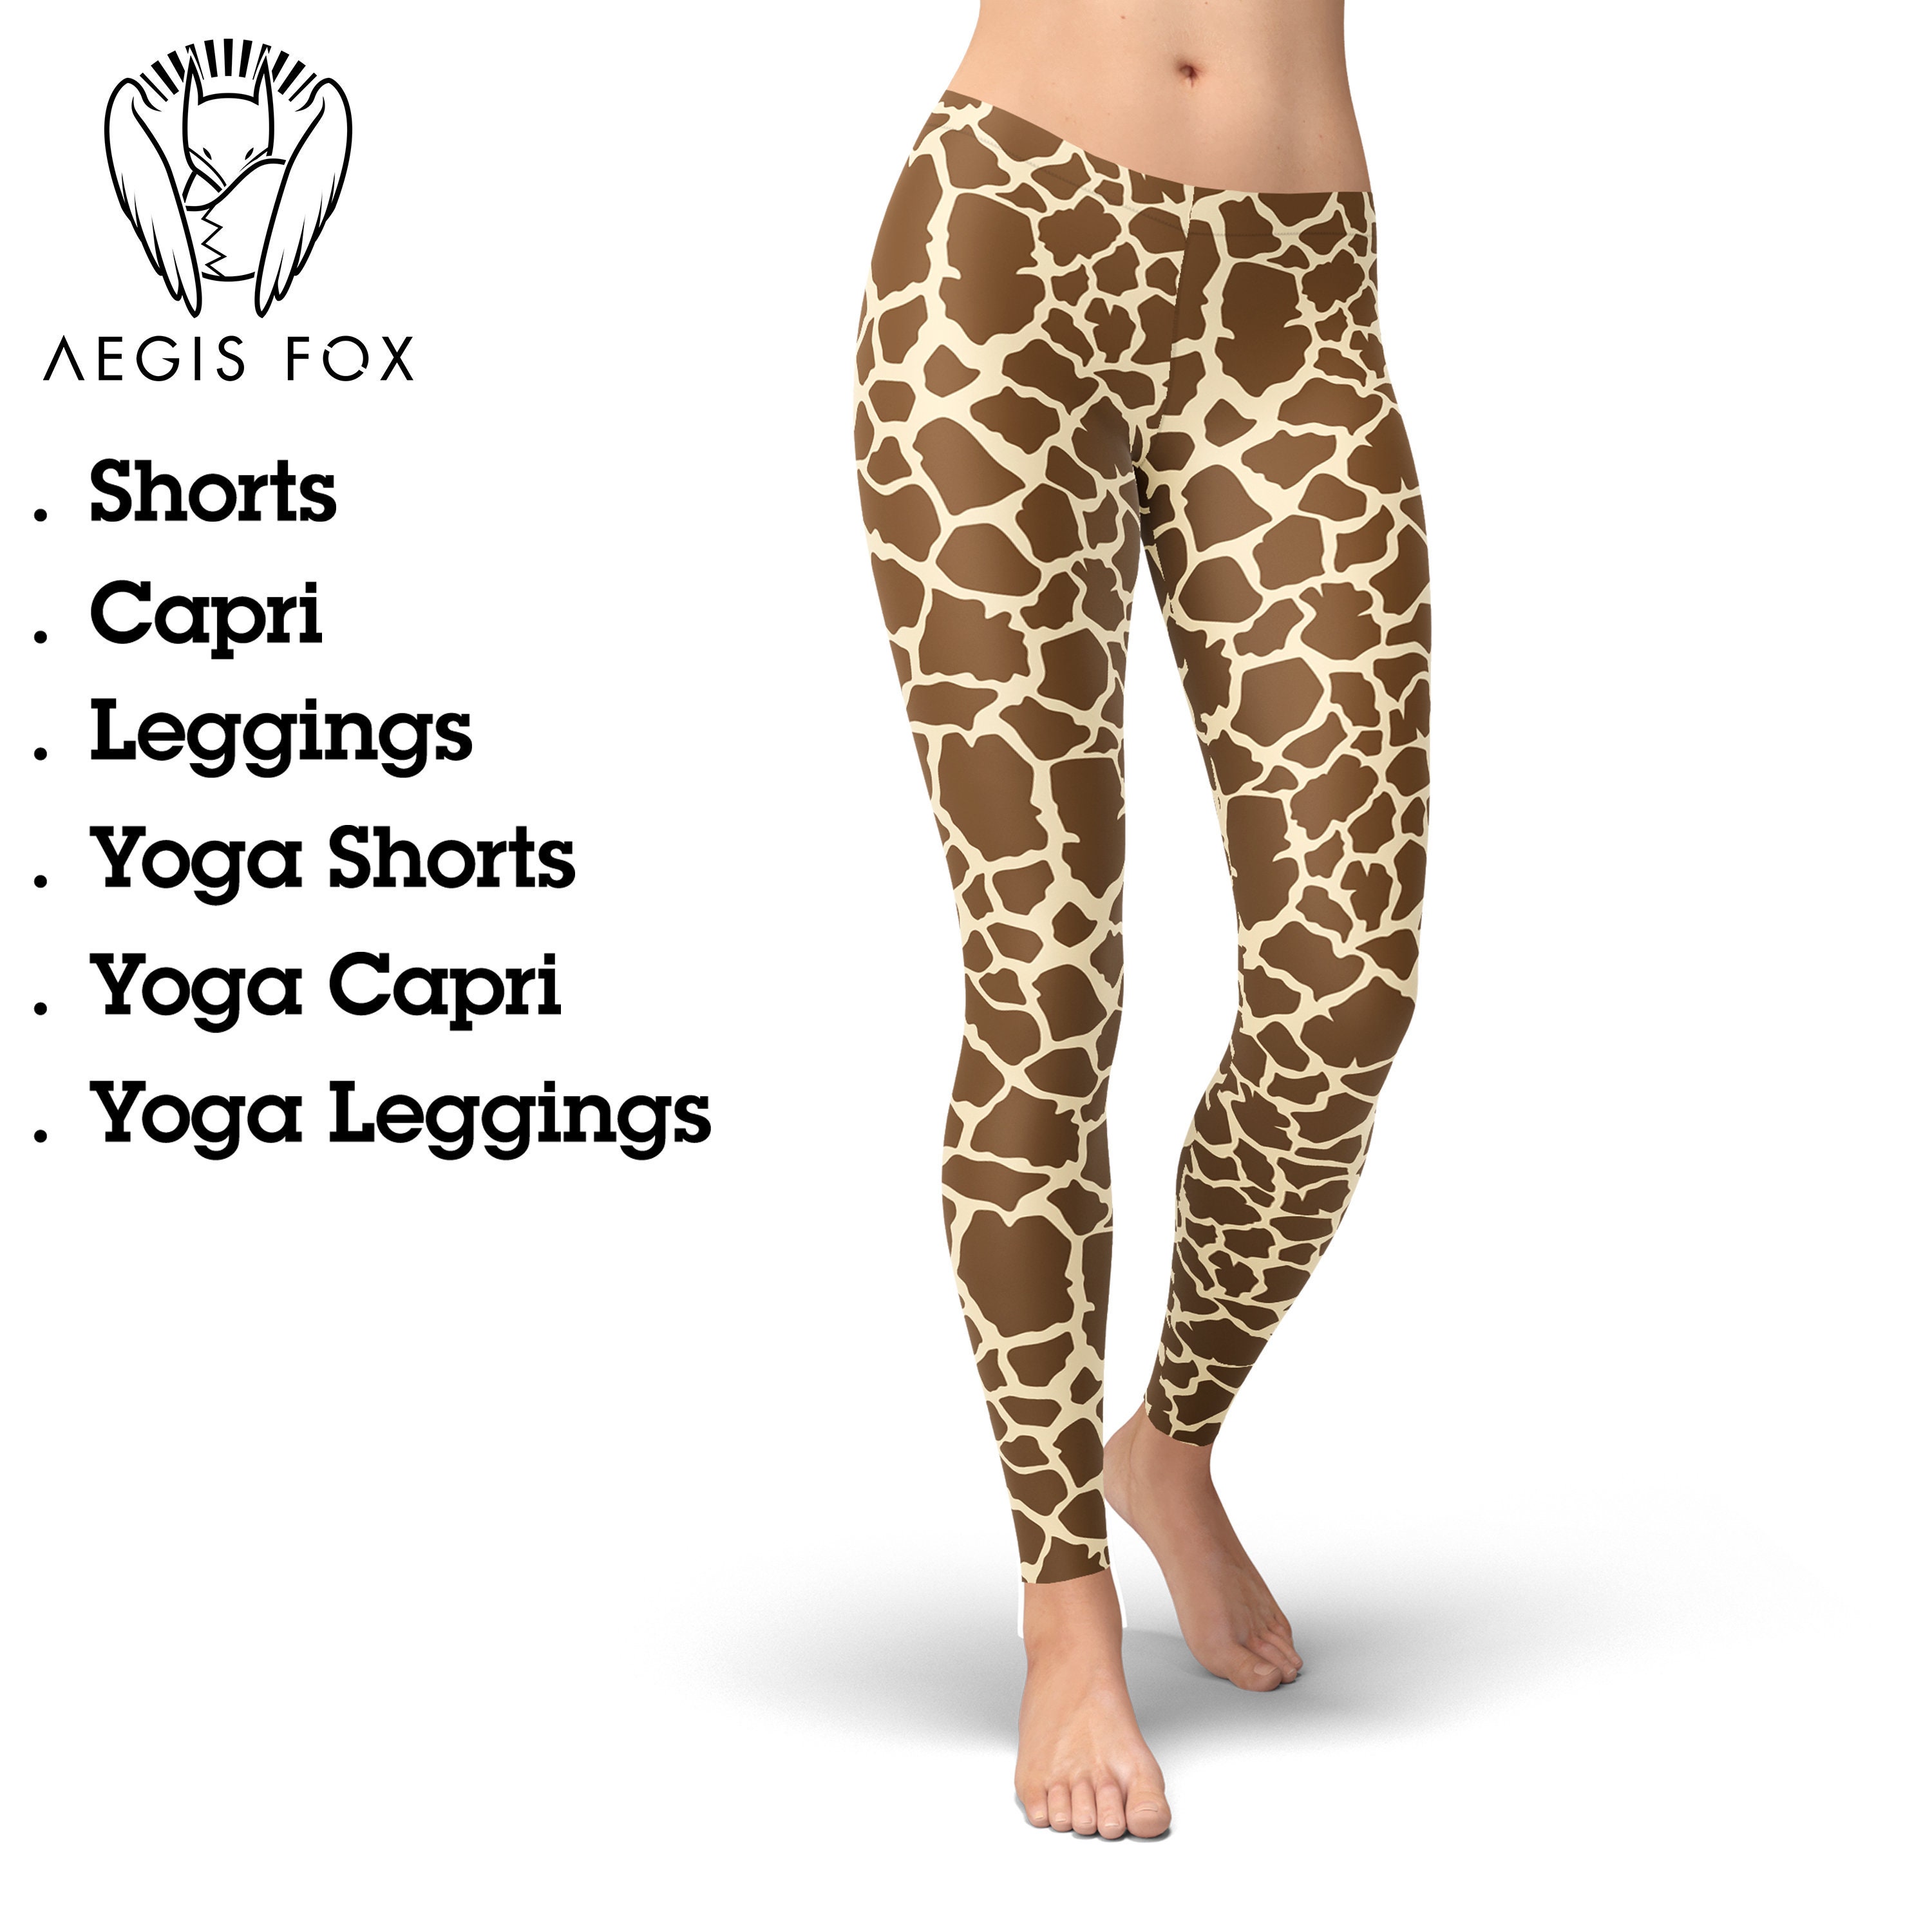 Our Girls Comfy Leggings Tshirt Set with a cute giraffe print is